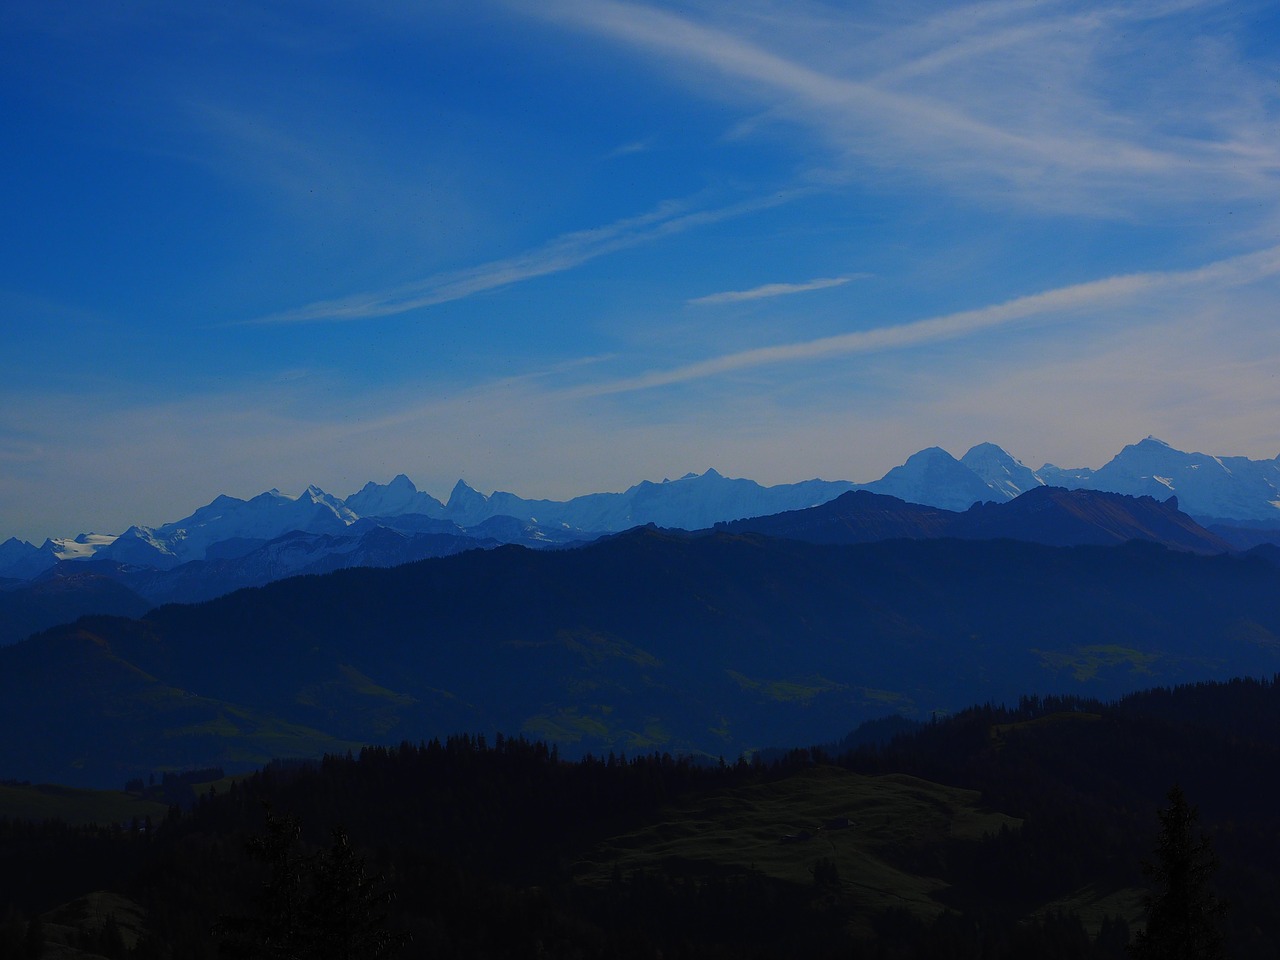 Alpių, Alpių Panorama, Whelk, Roshenhorn, Mittelhorn, Wetterhorn, Lauteraarhorn, Schreckhorn, Näshihorn, Finsteraarhorn